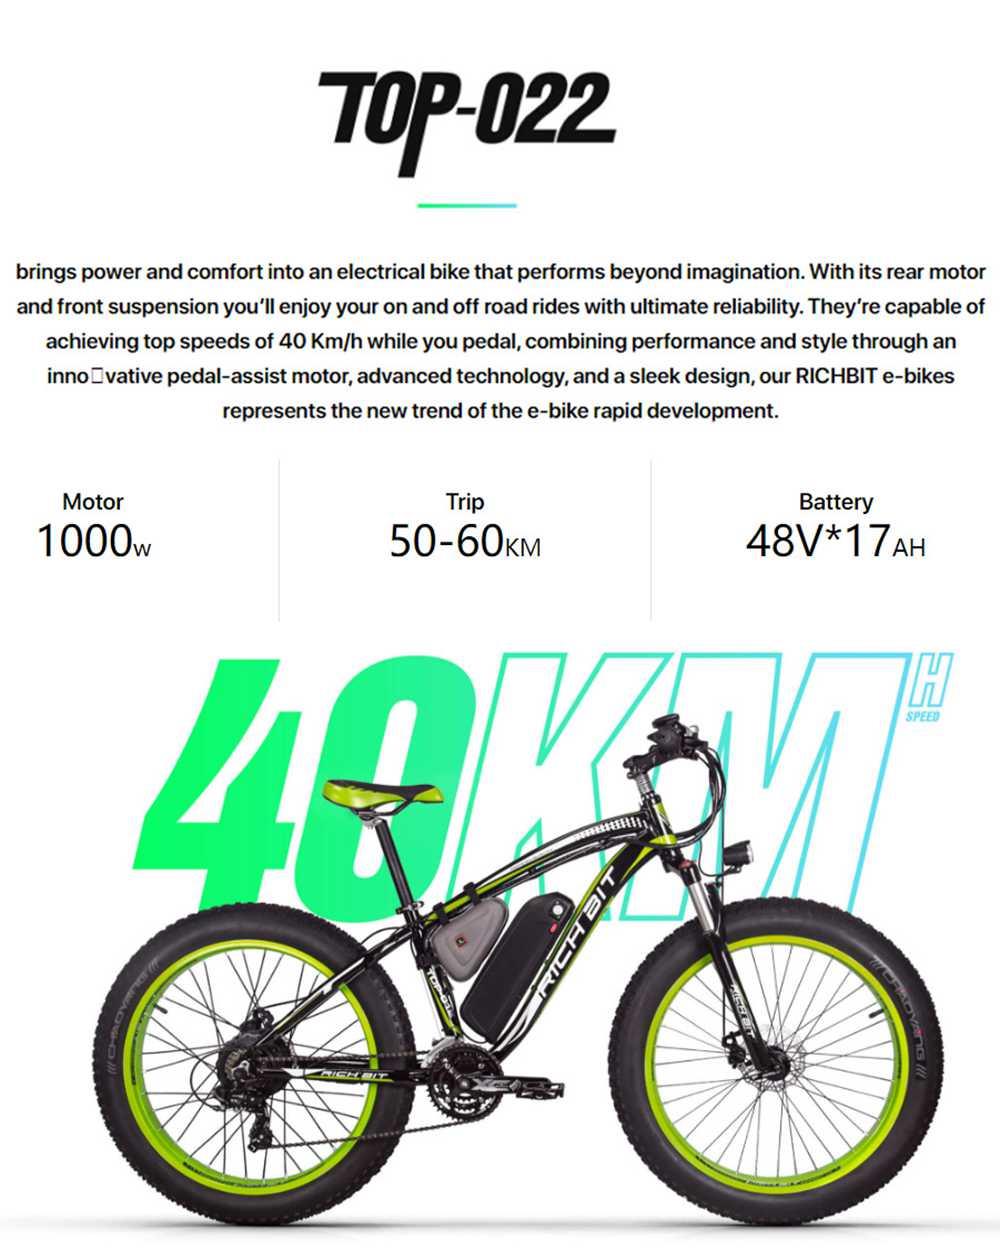 RICH BIT TOP-022 Electric Mountain Bike 26'' Tires 1000W Motor 35km/h Max Speed Up To 60km Range Dual Disc Brake LCD Display - Black Green